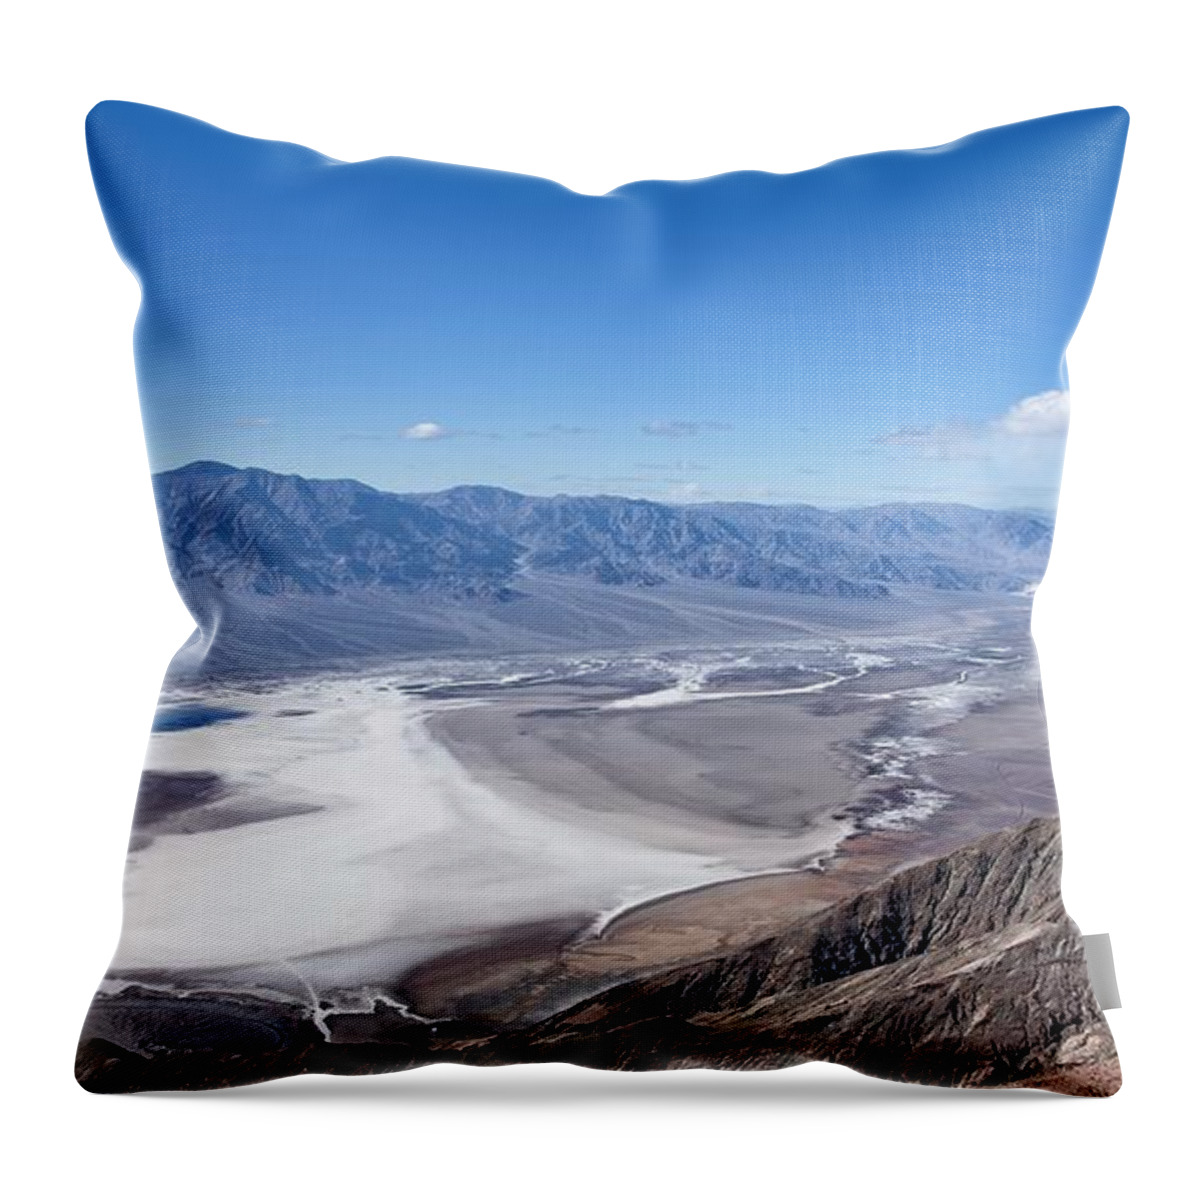 Landscape Throw Pillow featuring the photograph Alkali Flats Death Valley by Allan Van Gasbeck